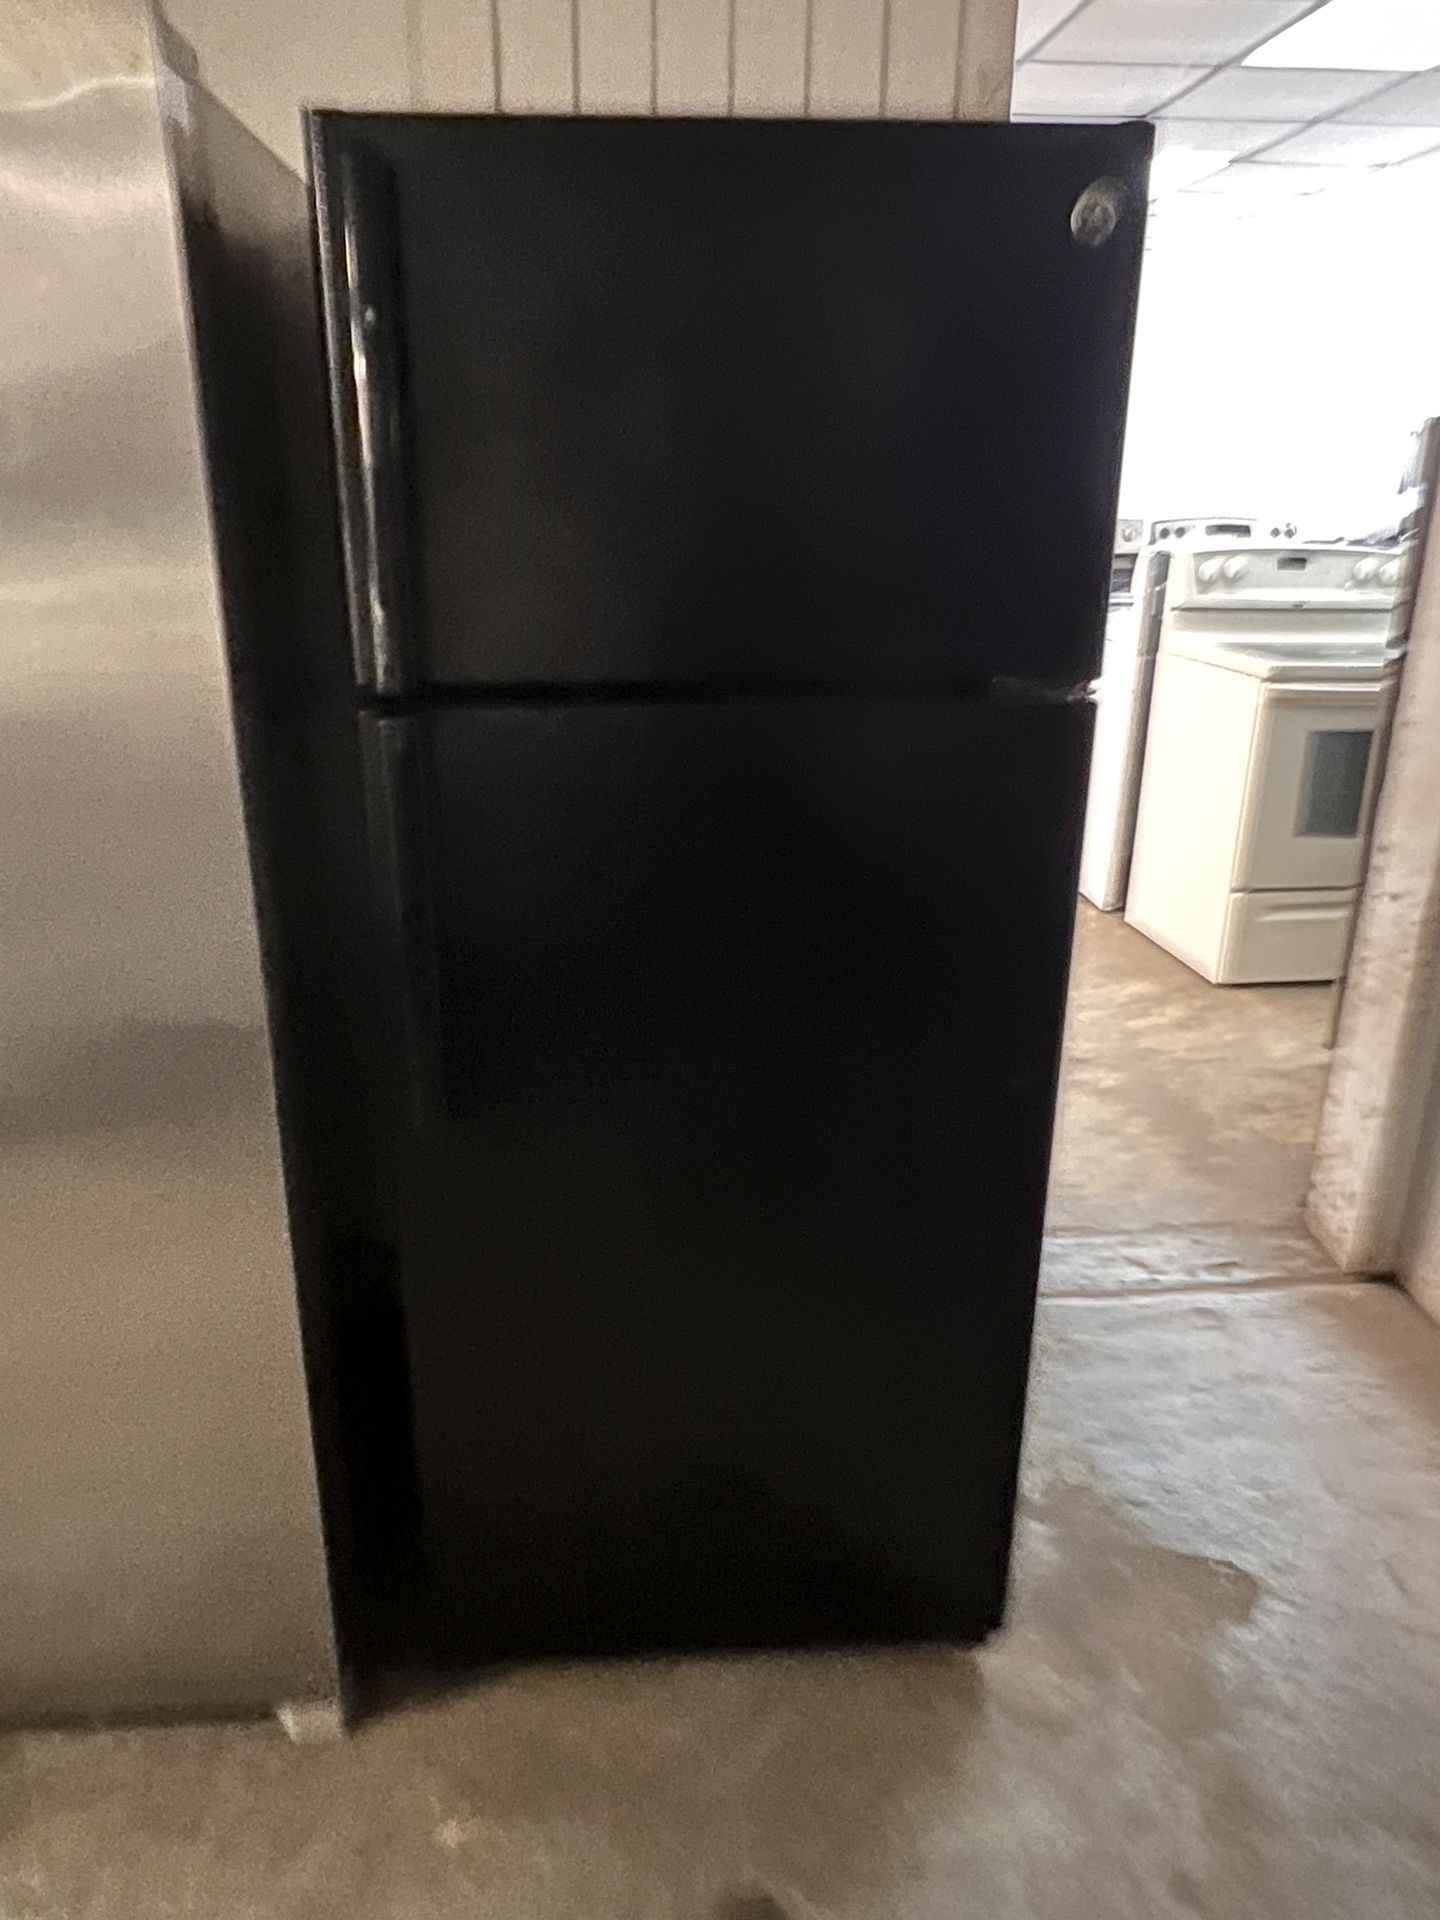 Top Freezer GE Black Refrigerator Great Condition 